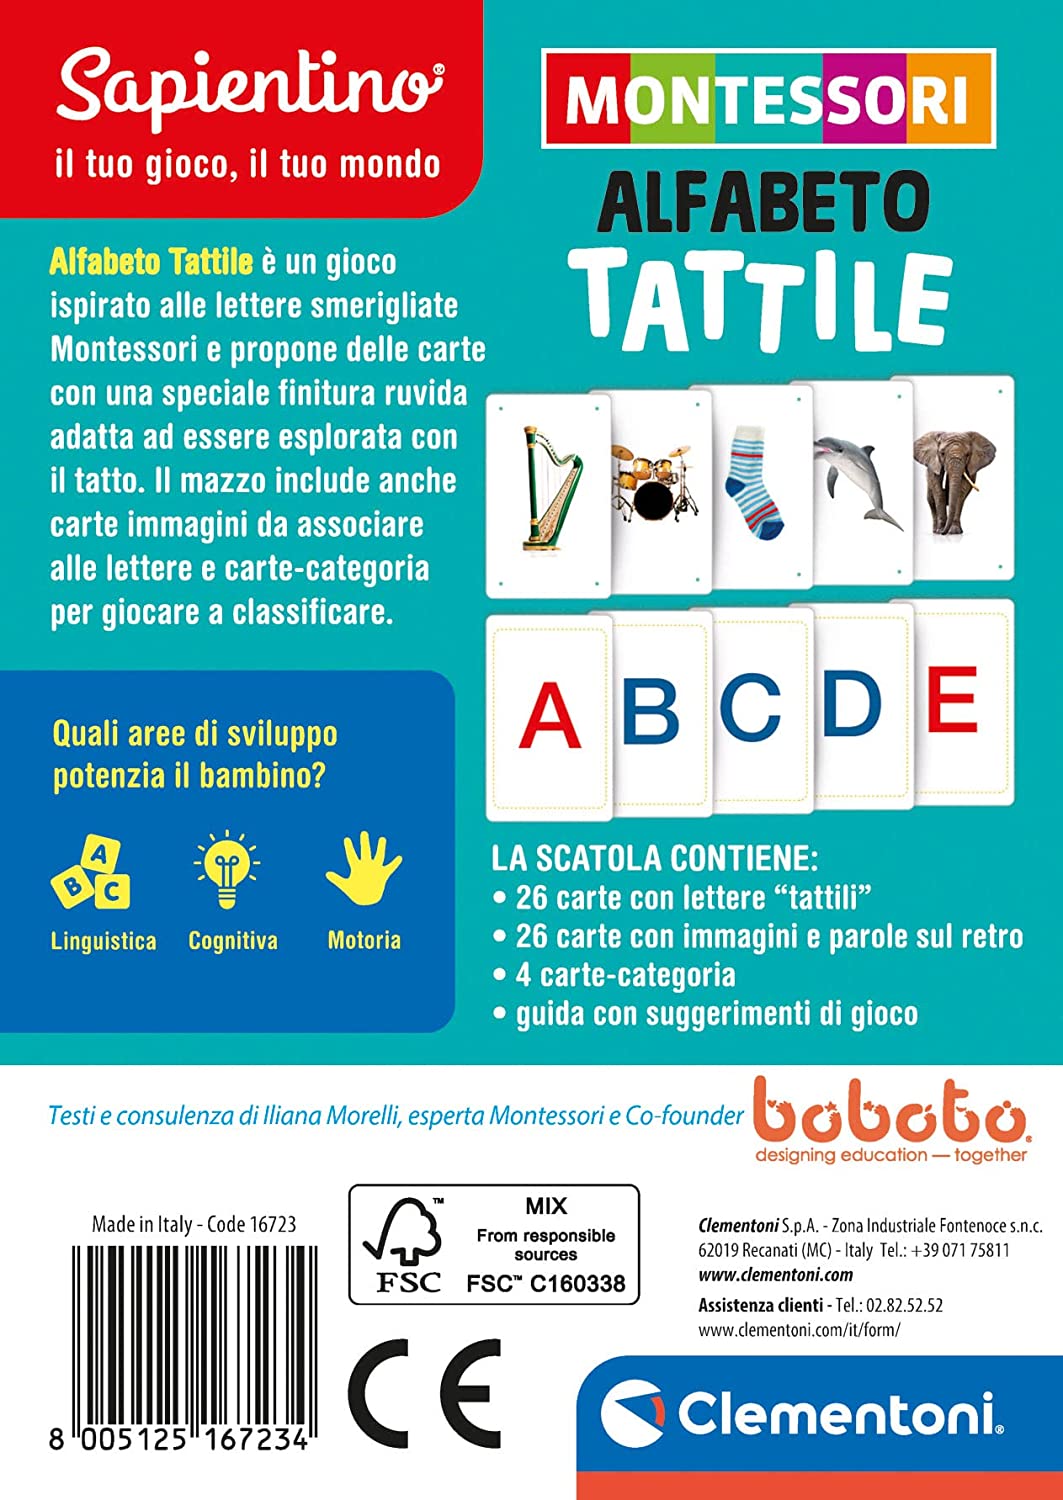 Montessori carte alfabeto tattile - SAPIENTINO